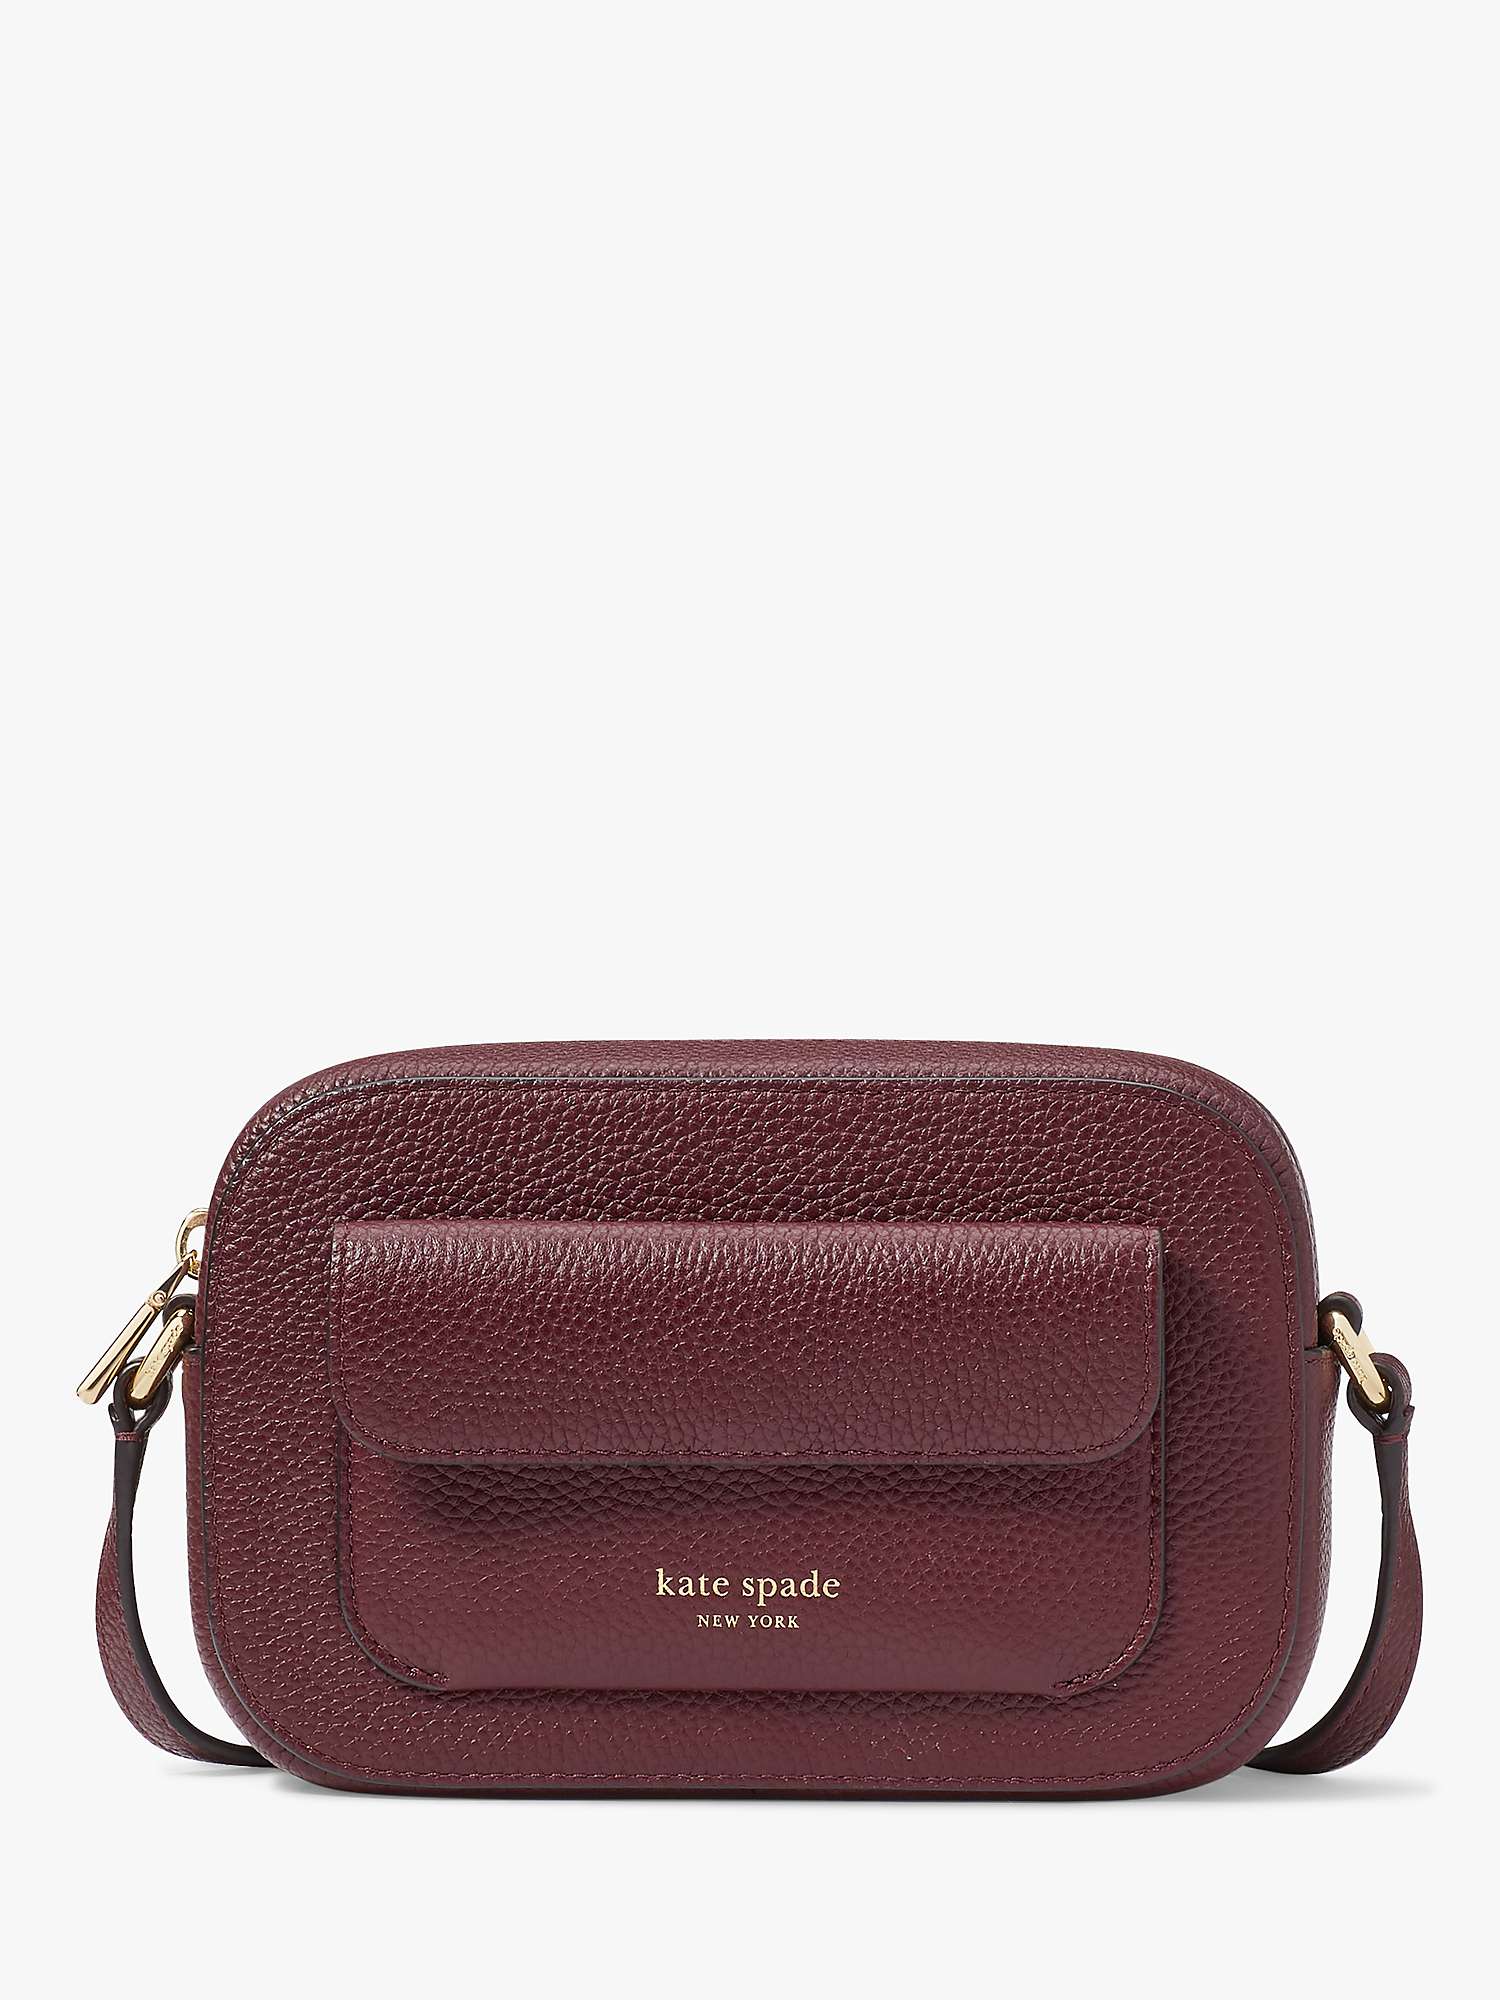 Buy kate spade new york Ava Leather Cross Body Bag Online at johnlewis.com